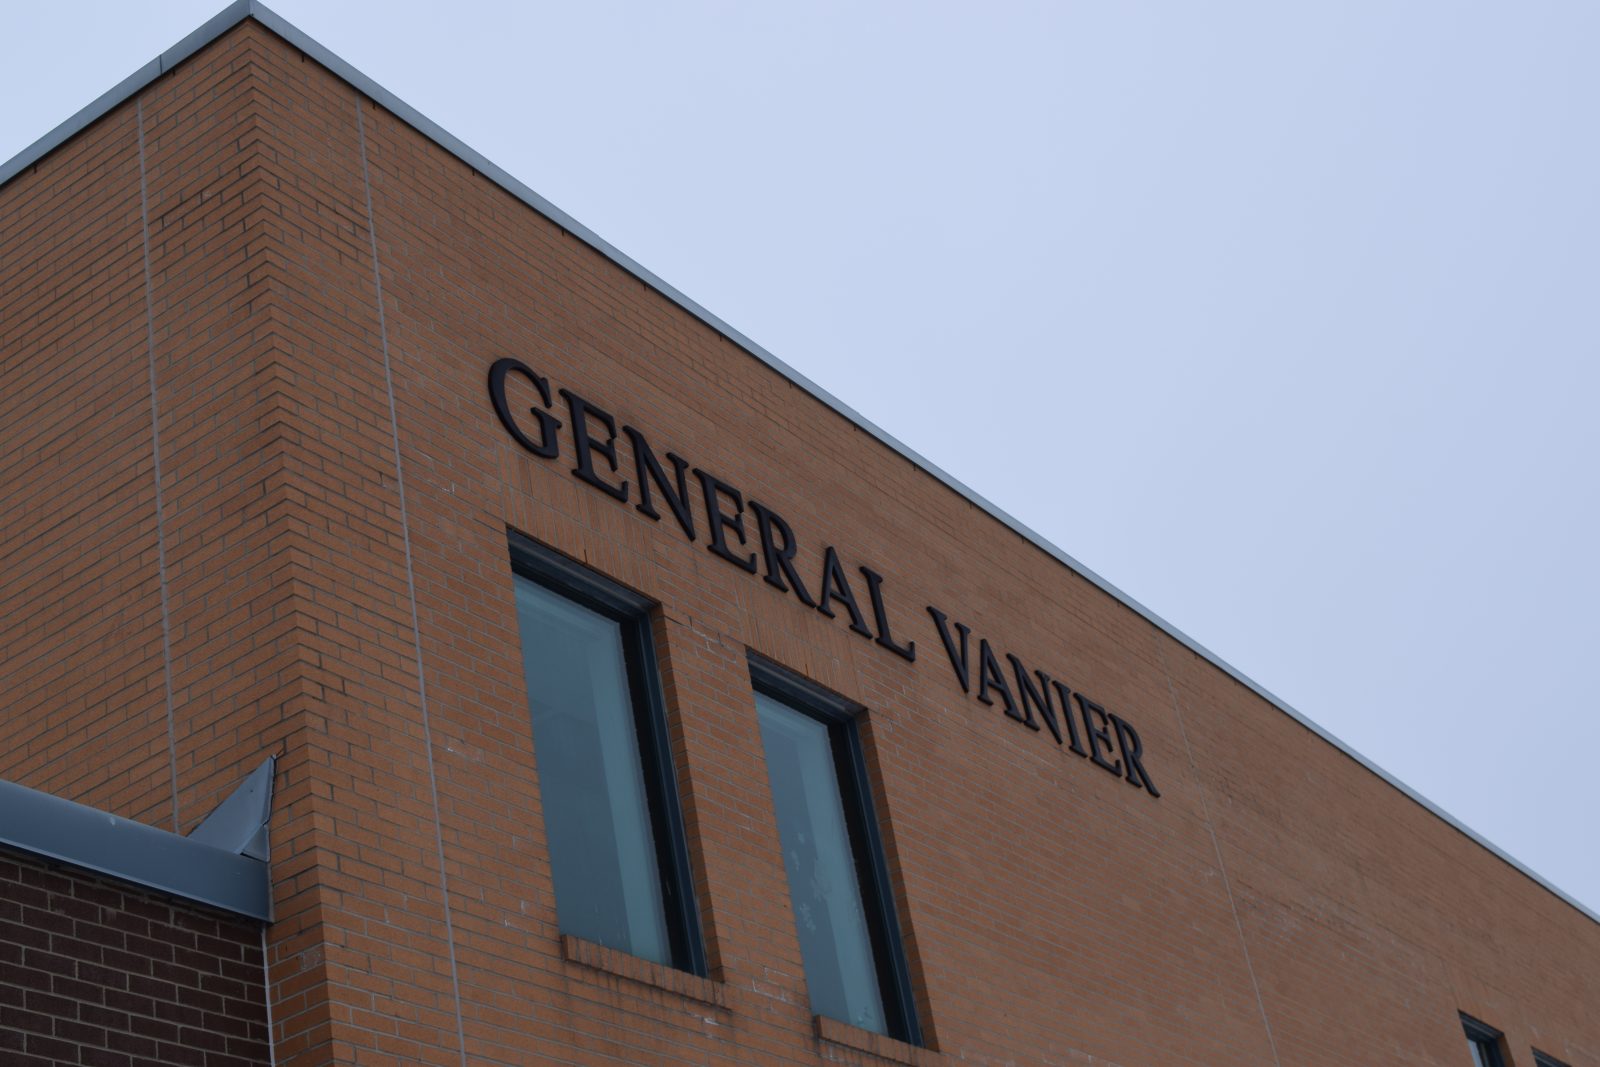 Catholic board in talks to acquire General Vanier